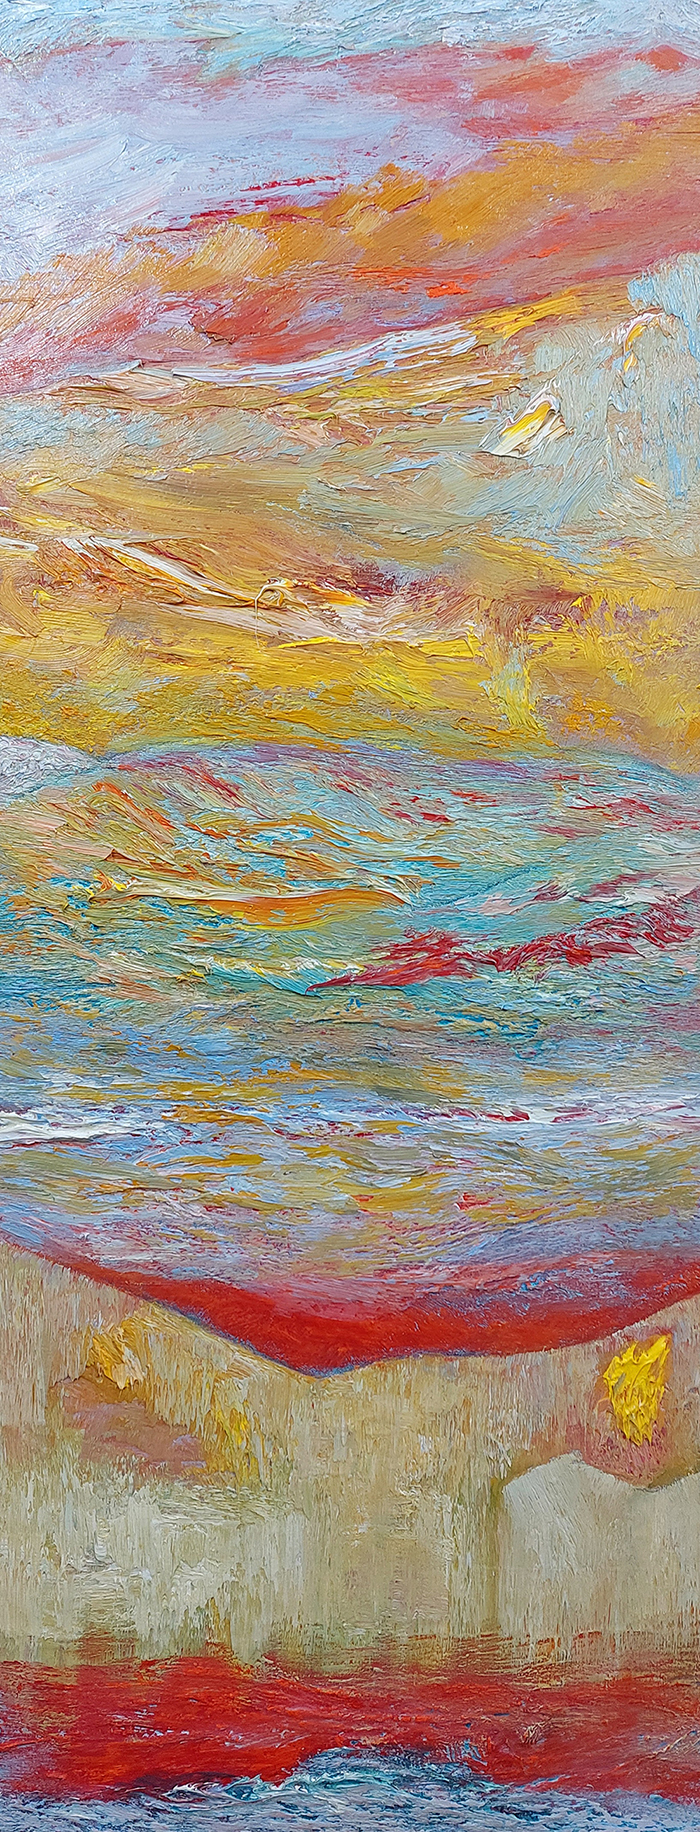 Journey Through the Islands- oil on canvas - 158 x 66 cm